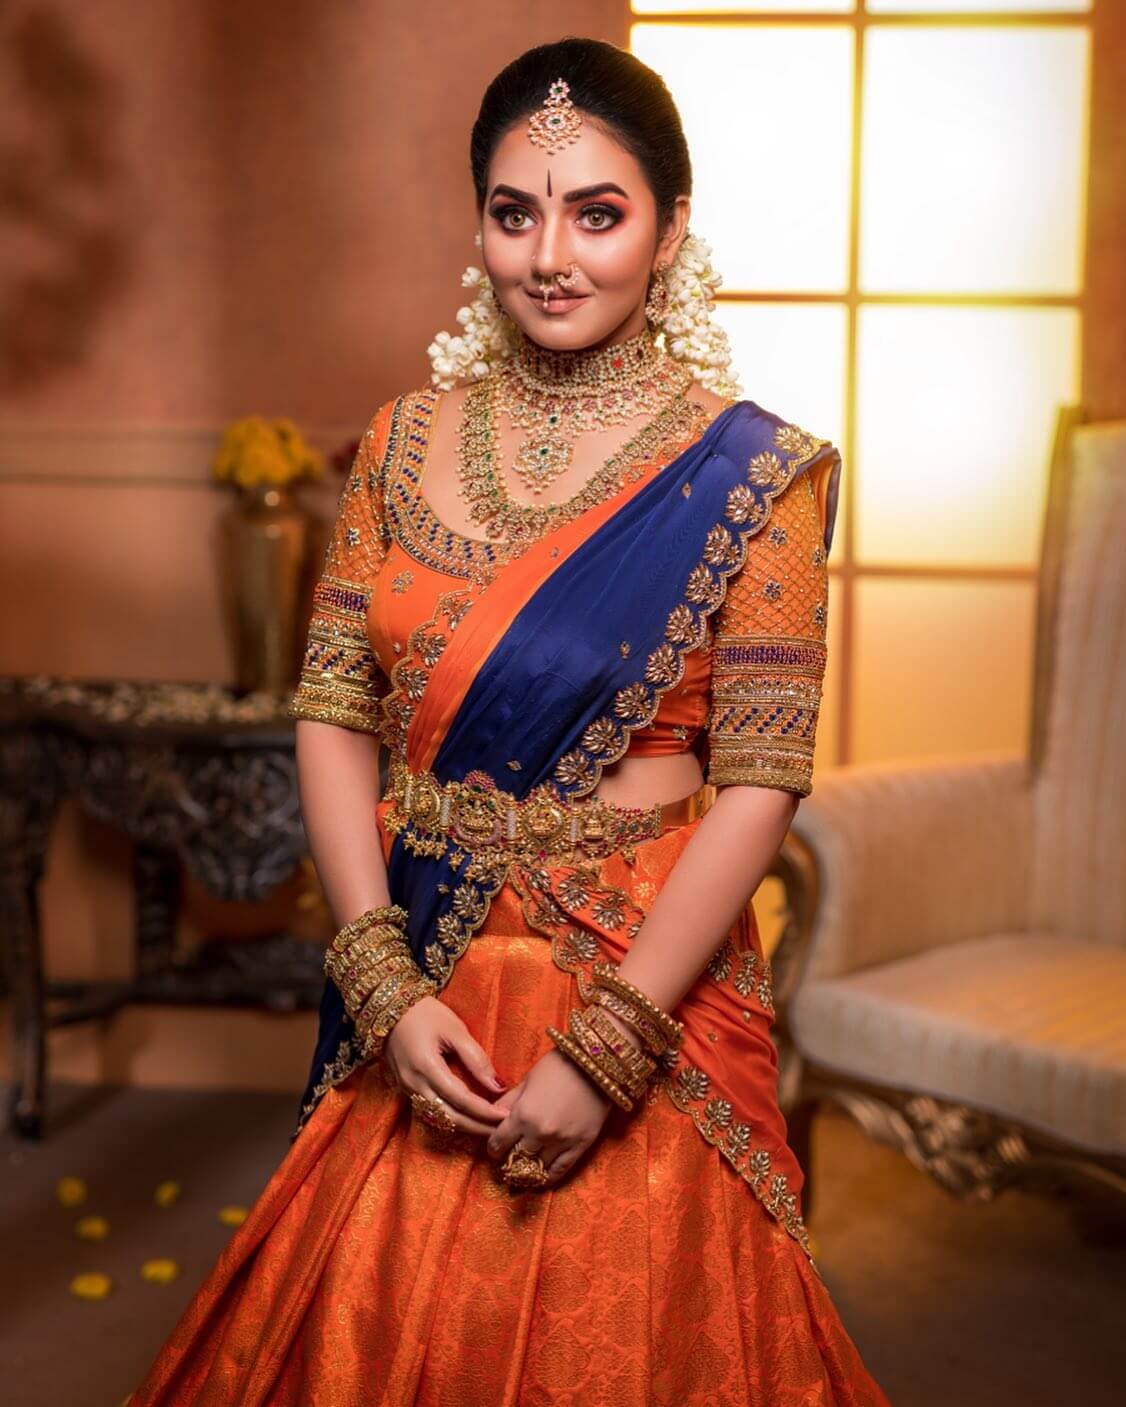 Vidya Pradeep Look Beautiful In Orange & Blue Lehenga With Gold Jewellery Can Be Your Dreamy Bridal Look